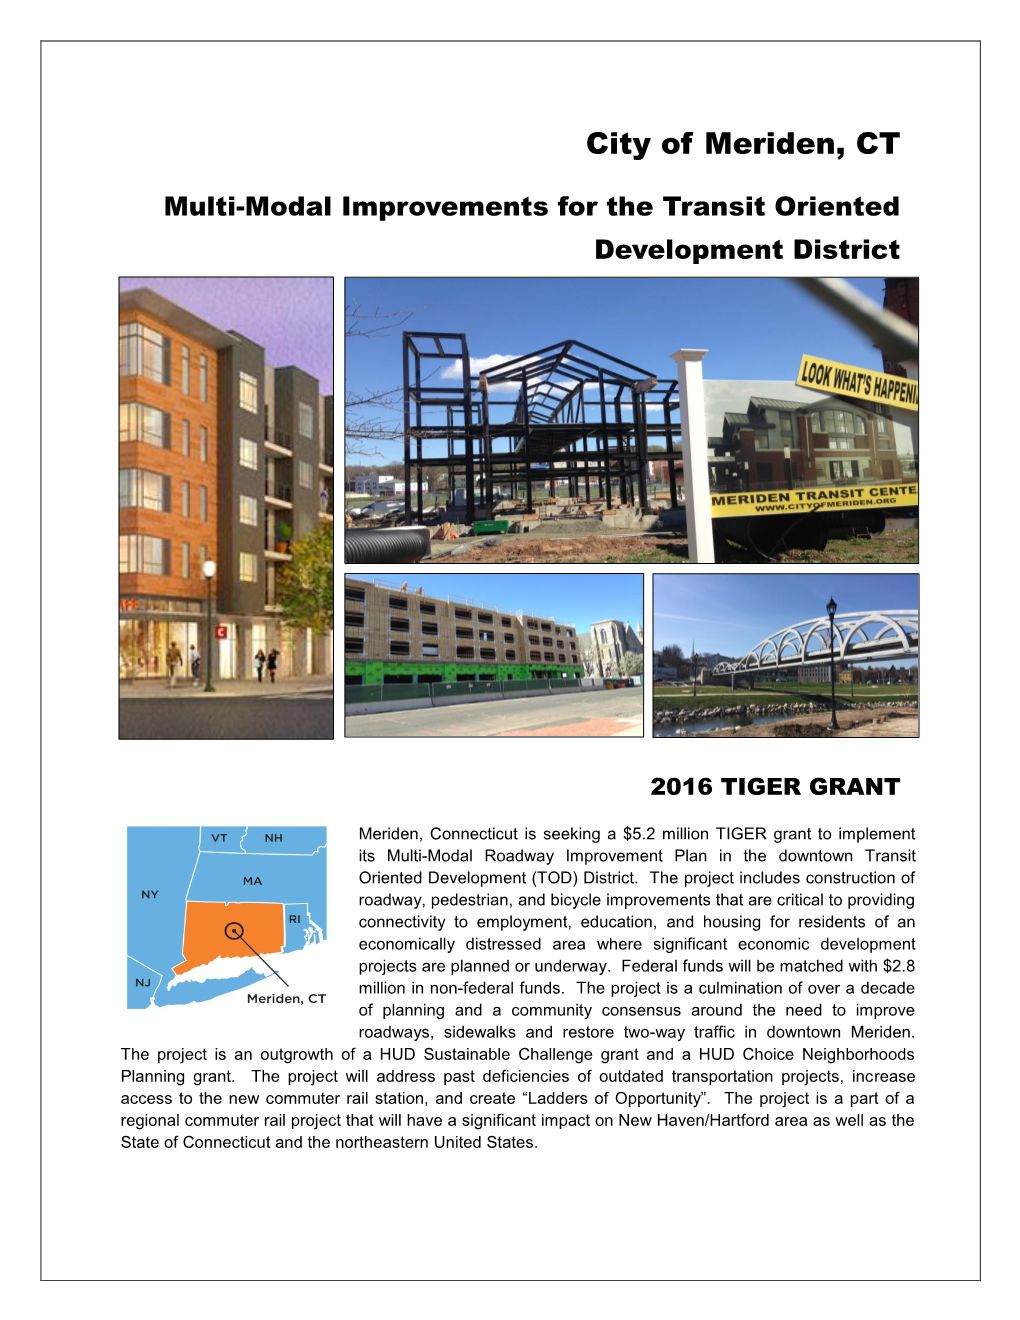 City of Meriden, Connecticut Multi-Modal Transportation Improvements for the Transit Oriented Development (TOD)